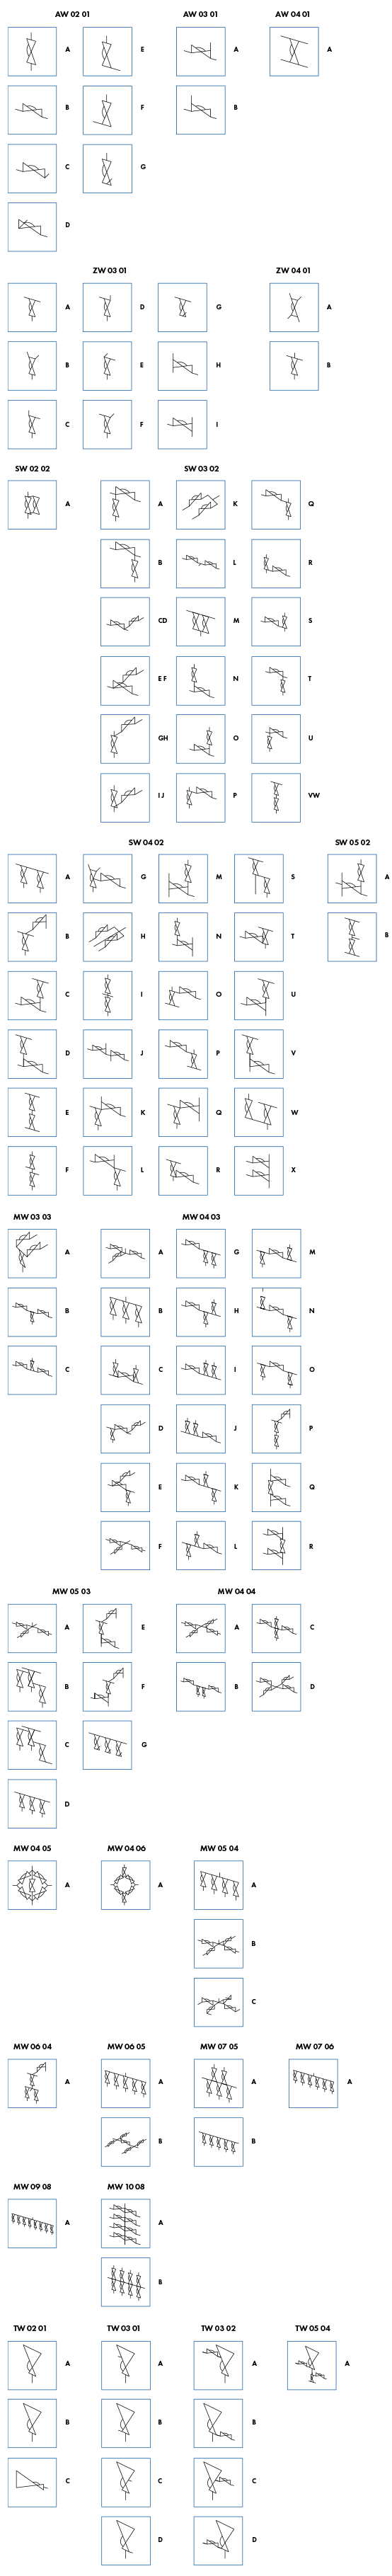 Bio-Block P&ID Table of Orientations